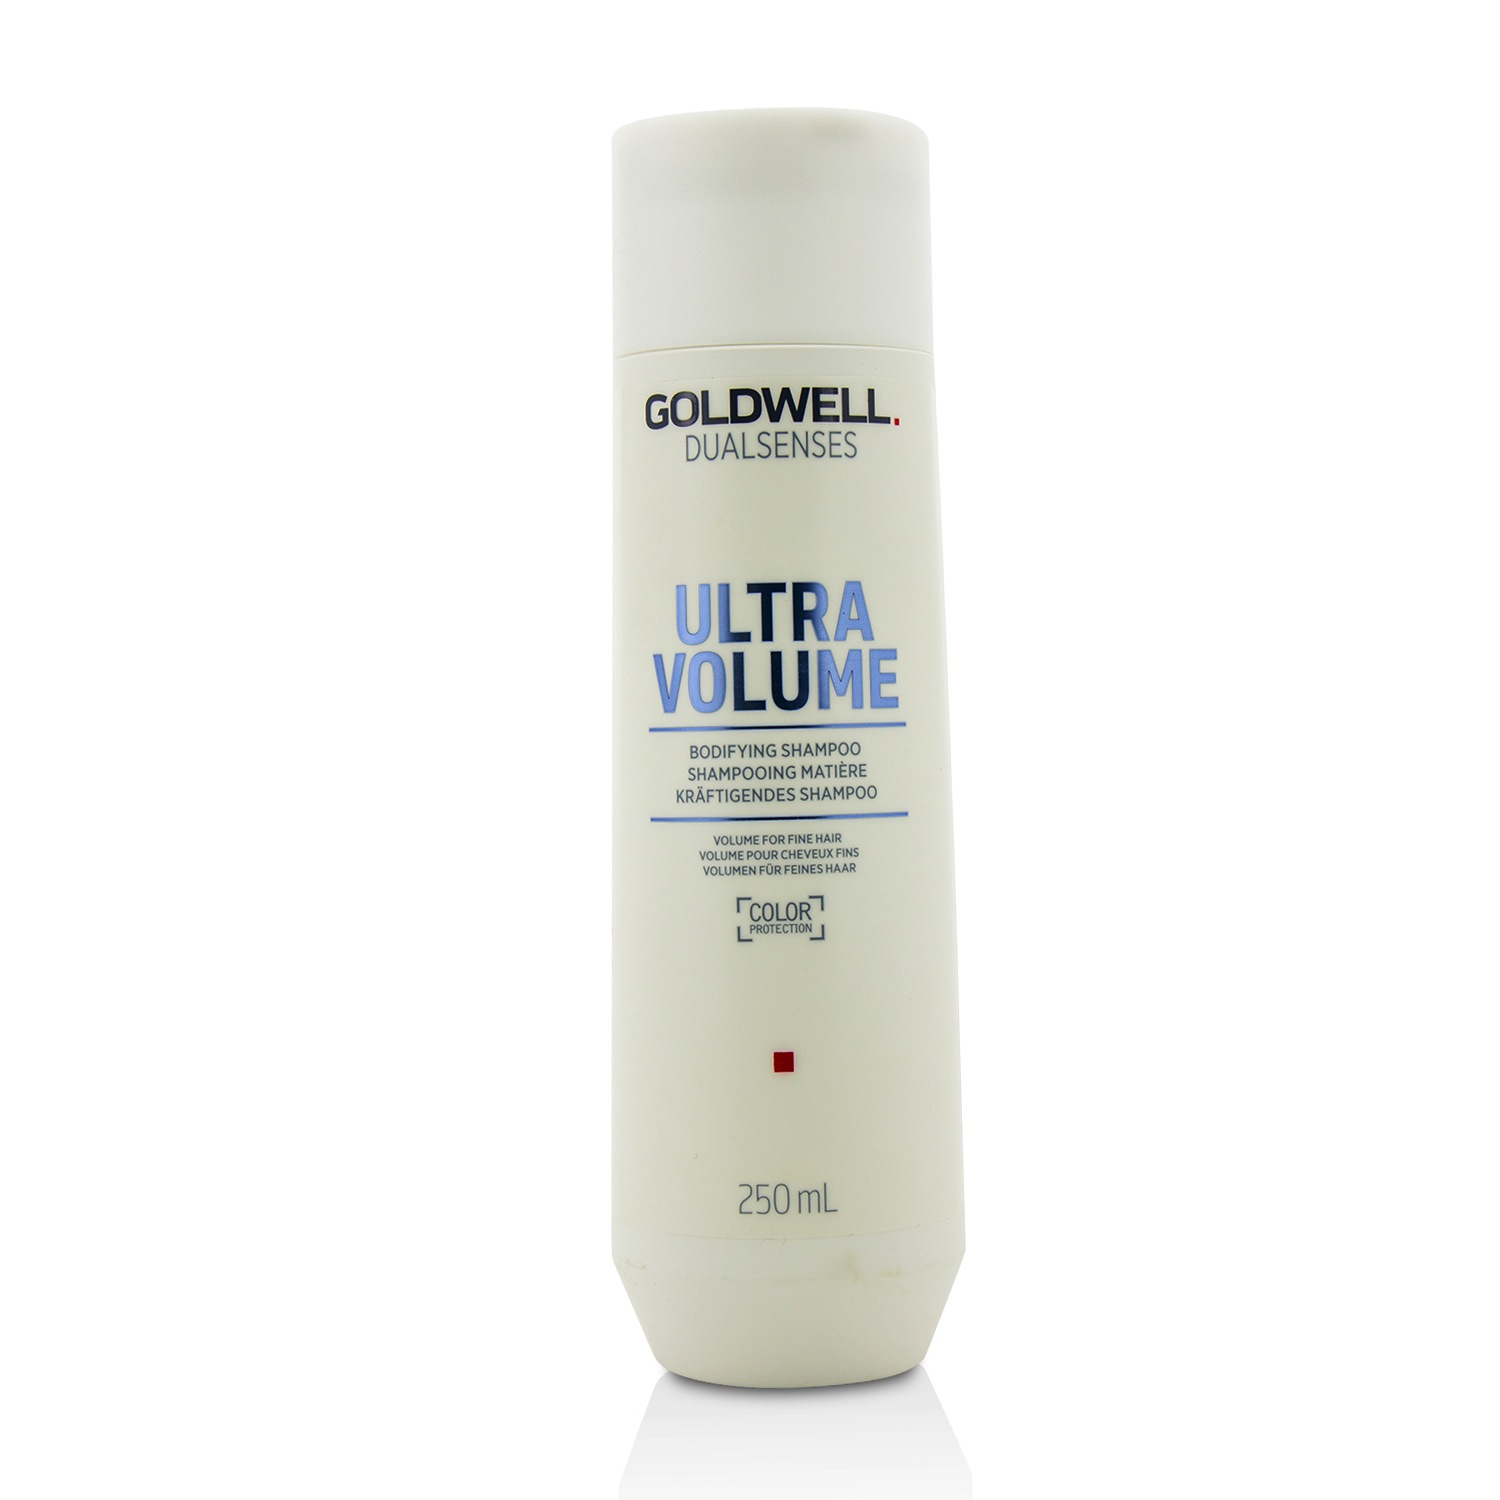 Dual Senses Ultra Volume Bodifying Shampoo (Volume For Fine Hair) Goldwell Image